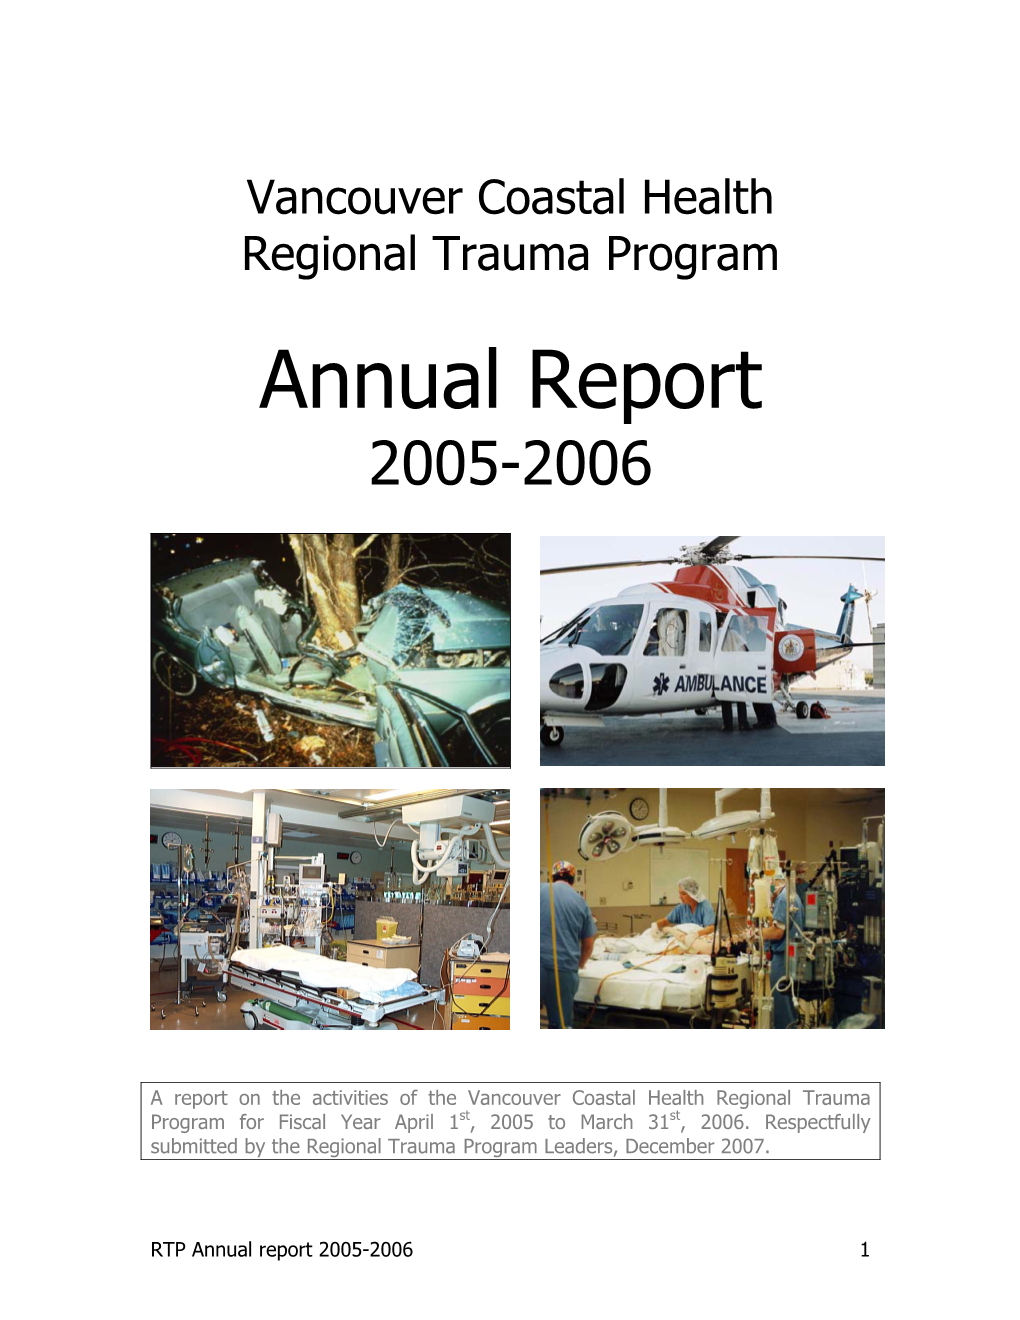 Vancouver Coastal Health Regional Trauma Program